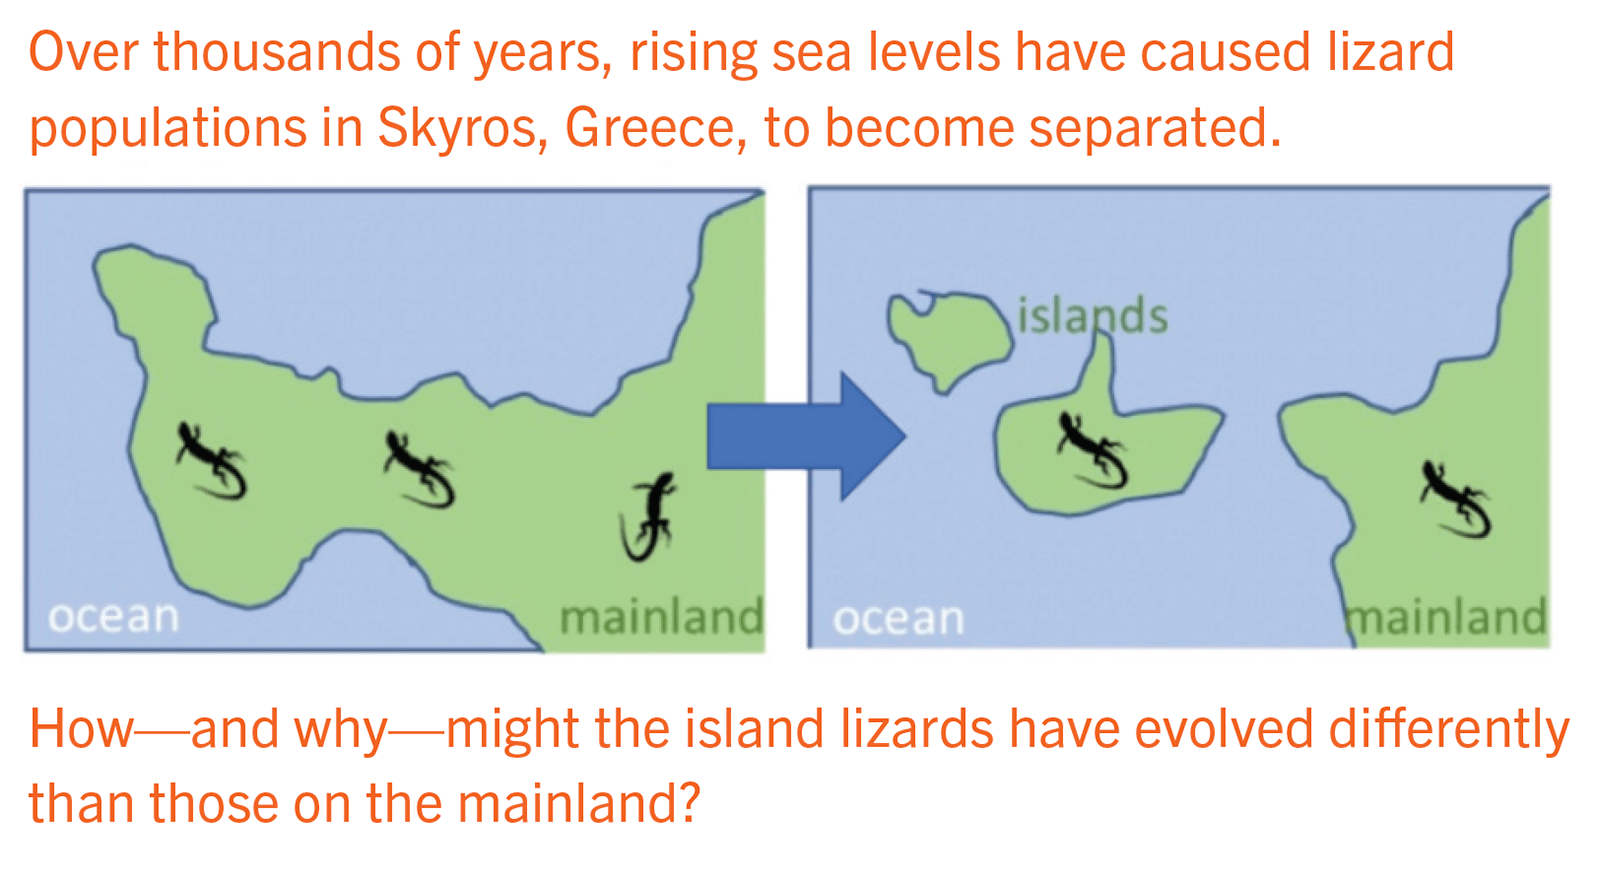 Lizard populations in Skyros, Greece